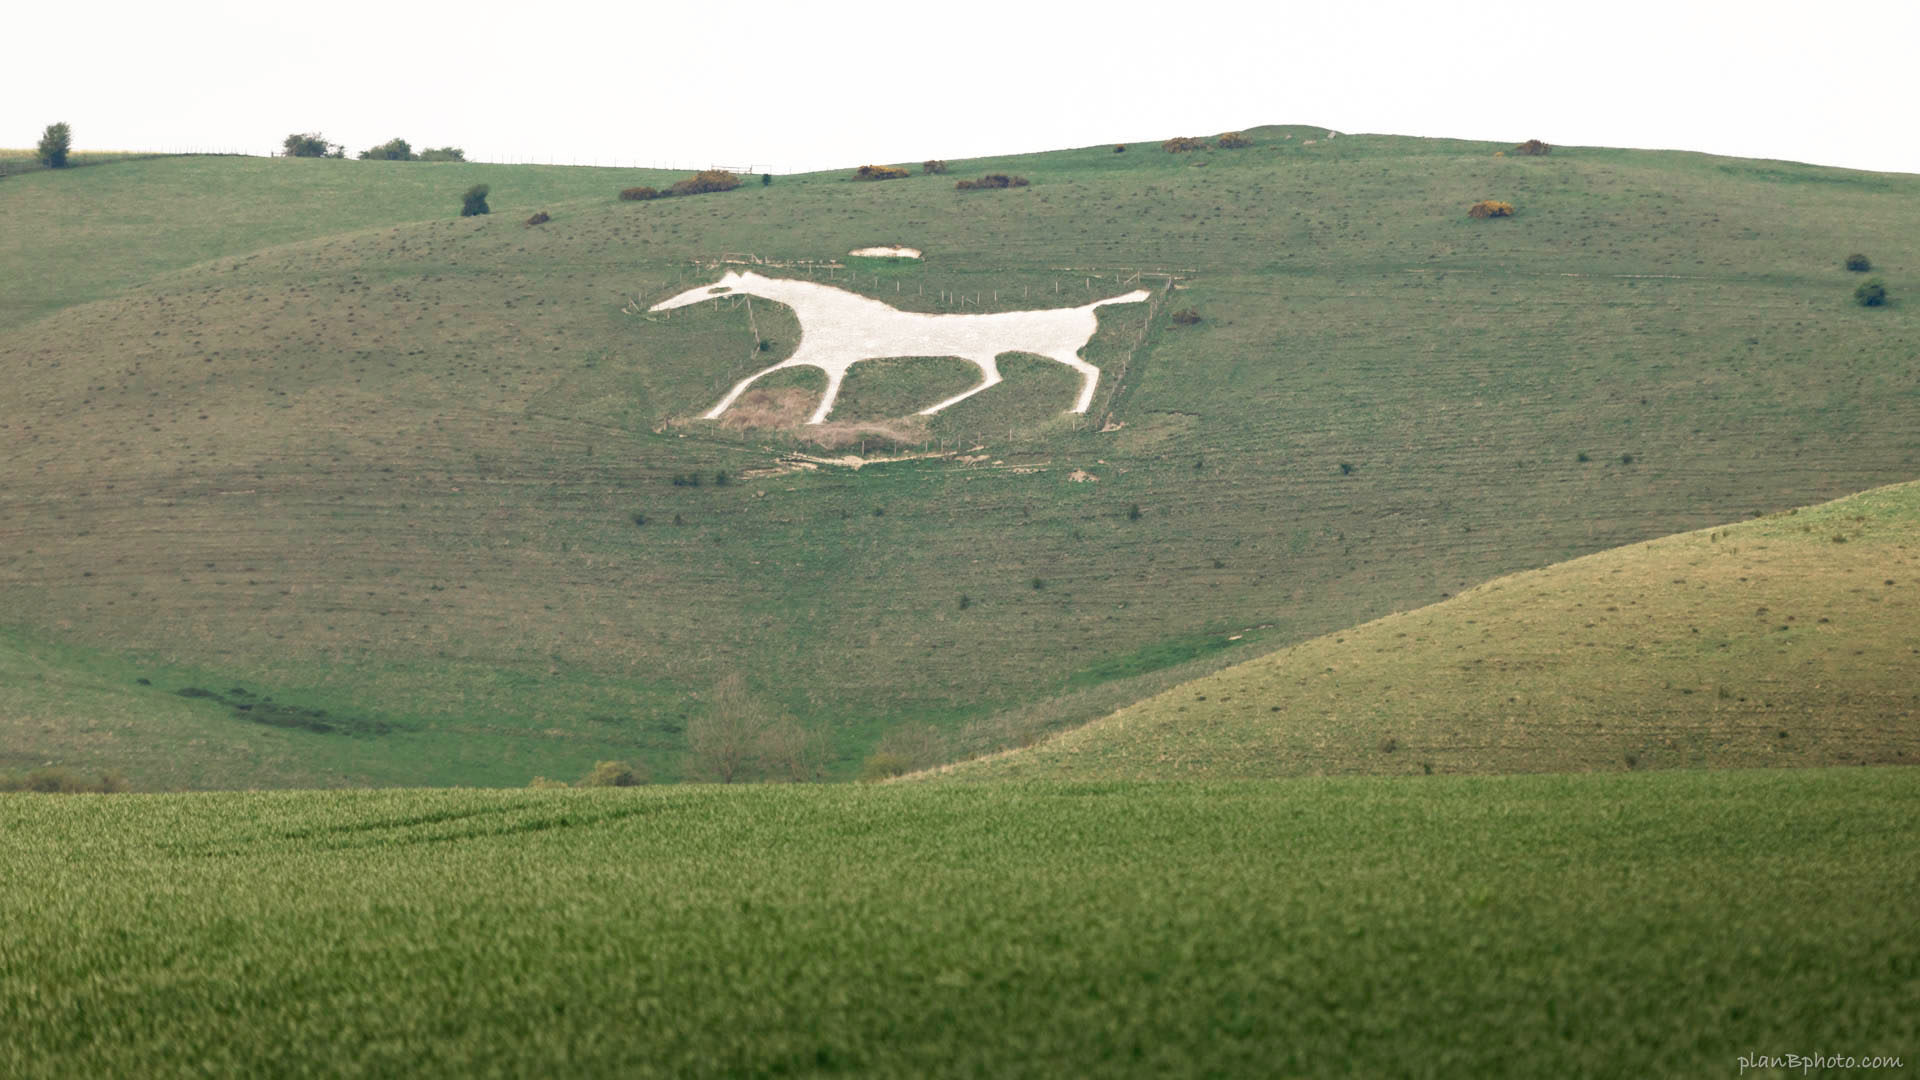 Alton Barnes white horse image